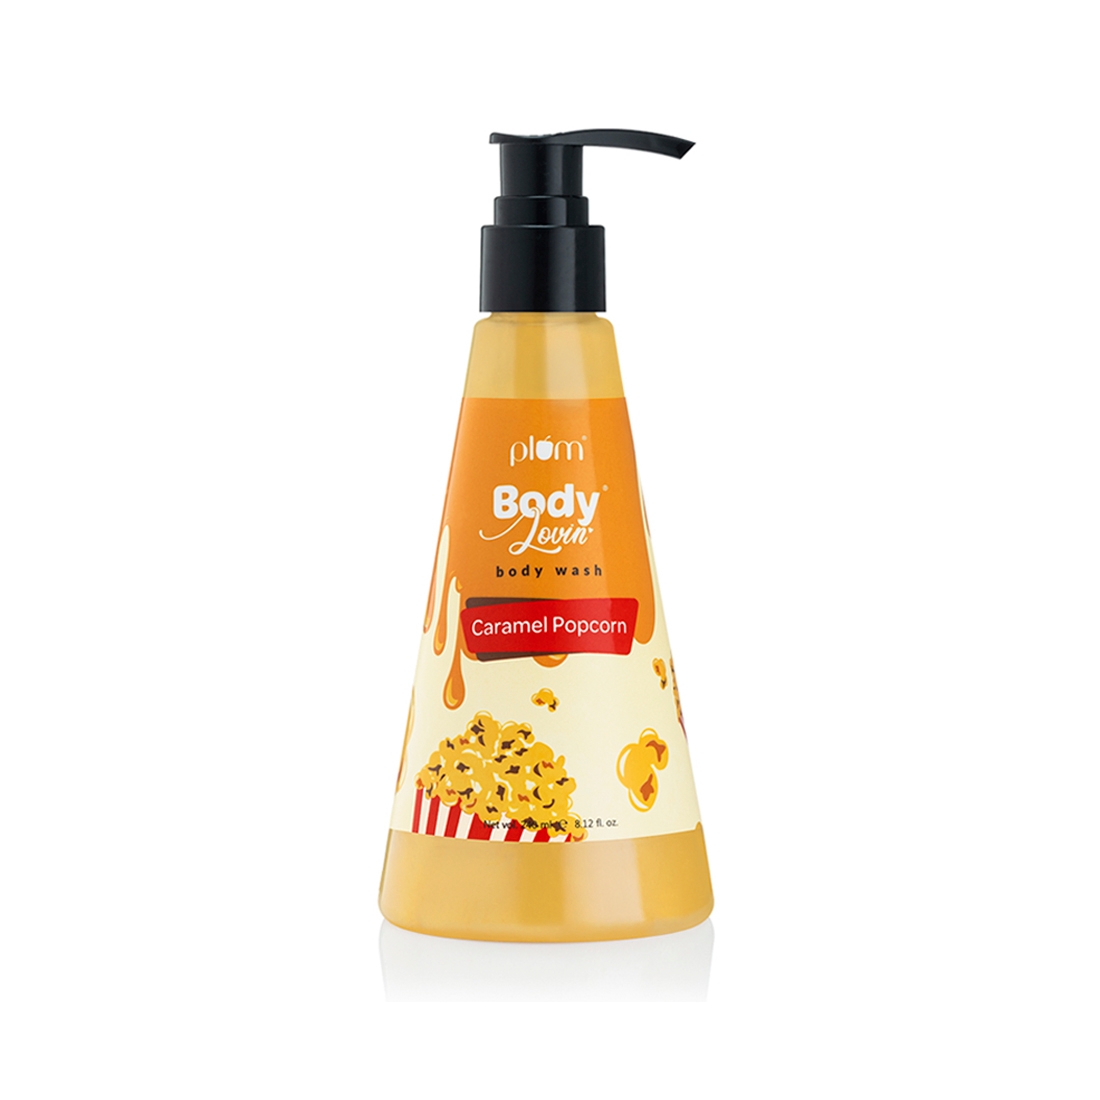 plum be good | Plum BodyLovin' Caramel Popcorn Body Wash | All Skin Types | Caramel Popcorn Fragrance | Non-Drying | Sulphate-Free | 100% Vegan 0